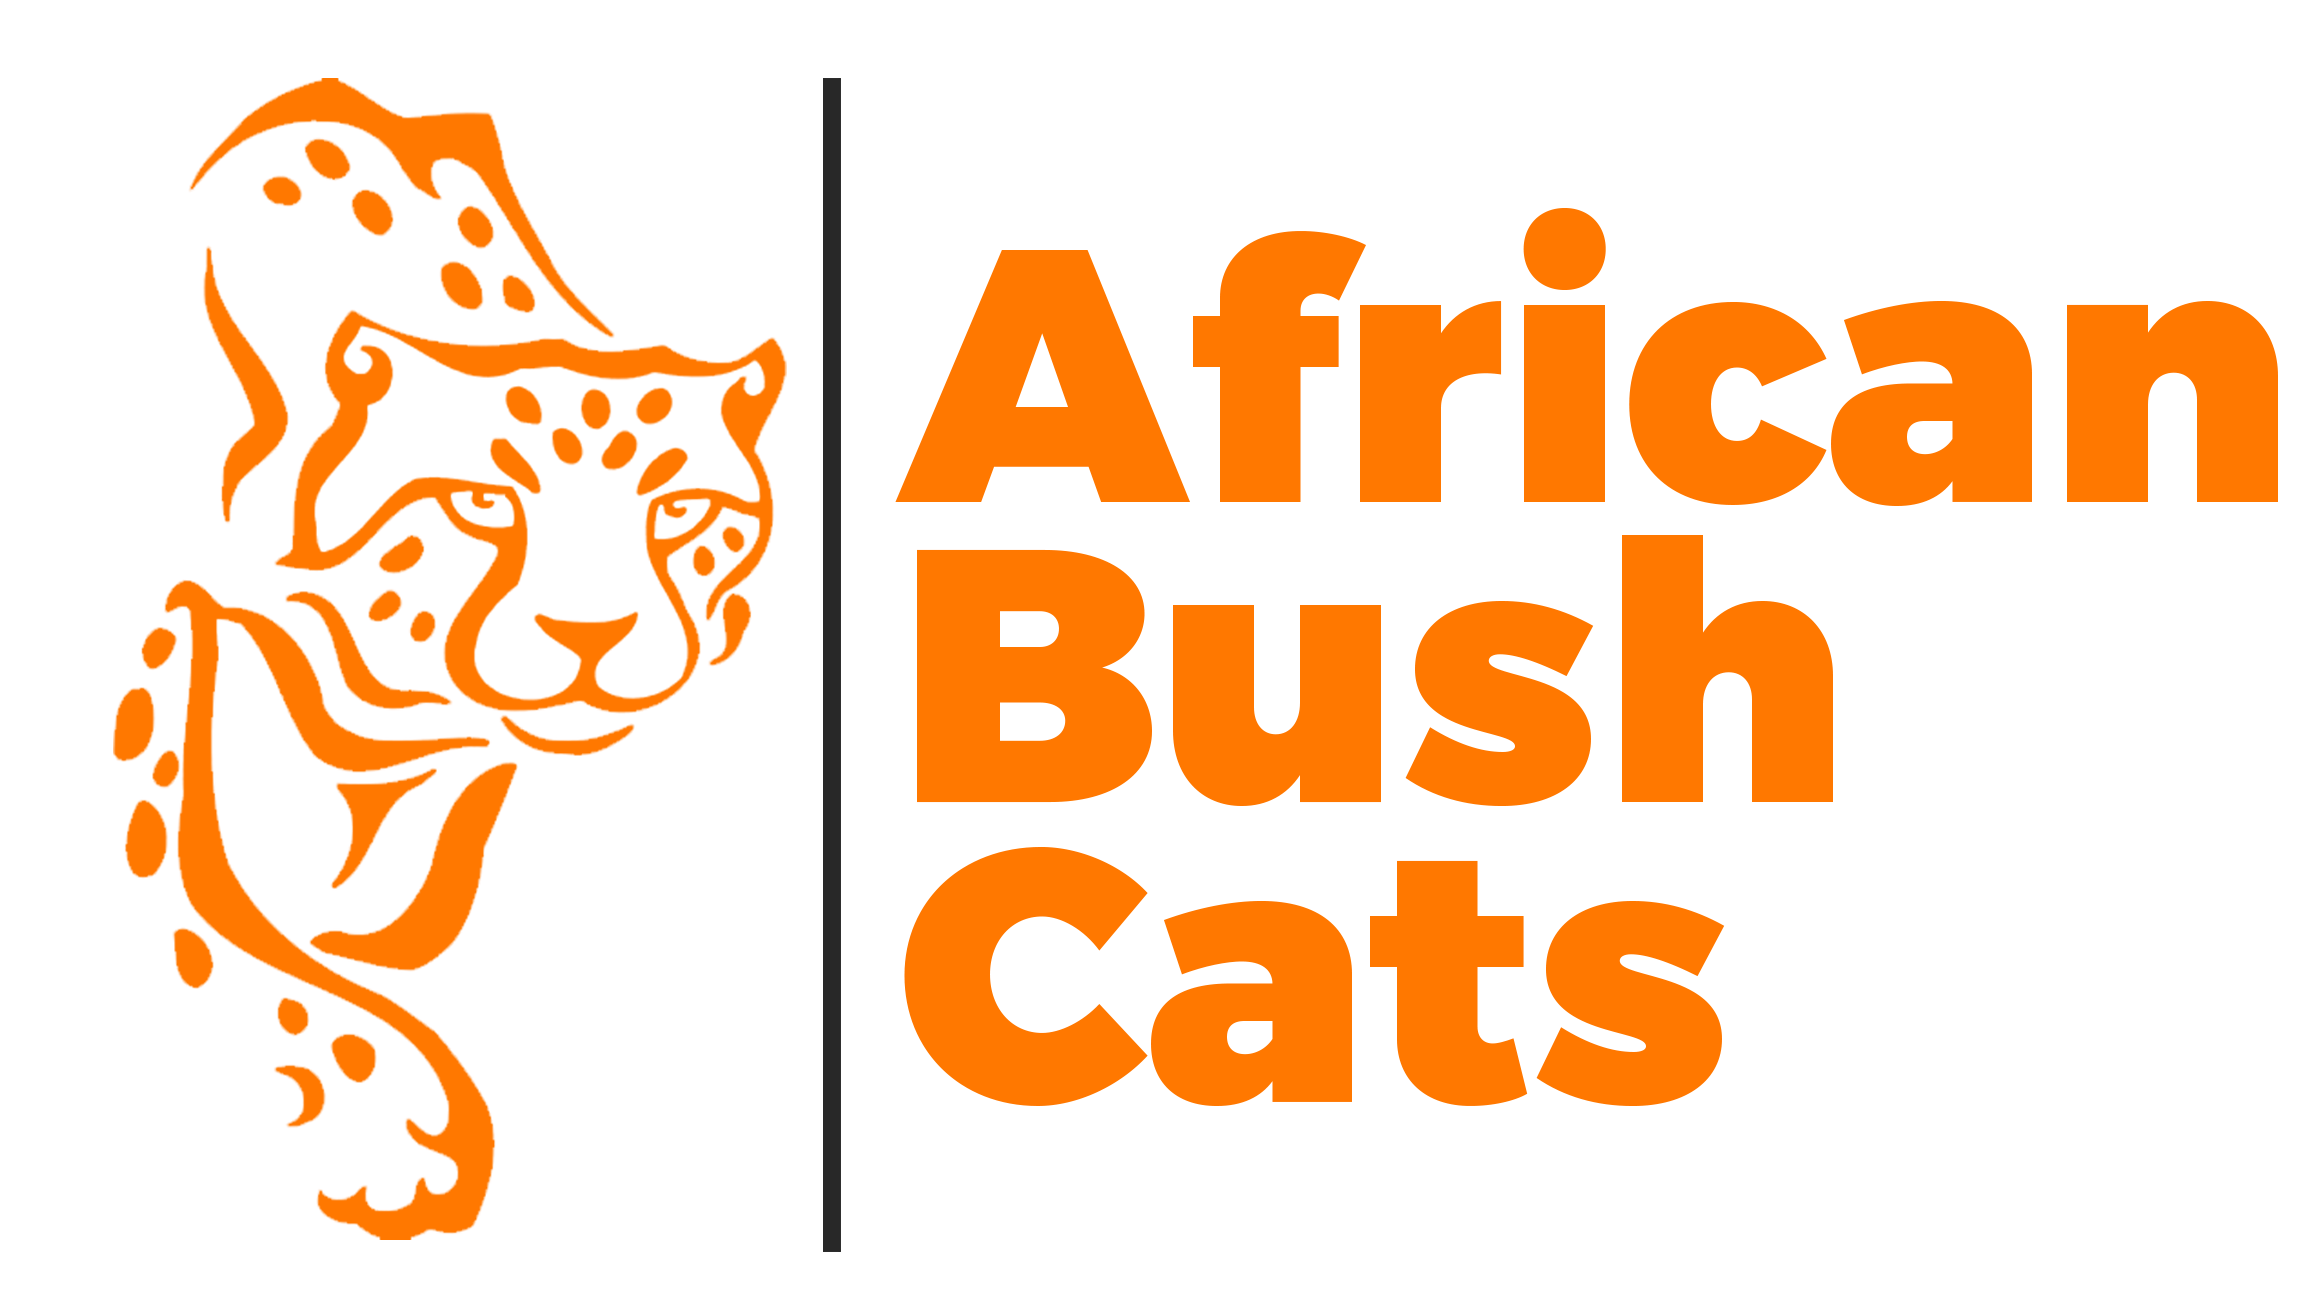 Africa Bush Cats ltd